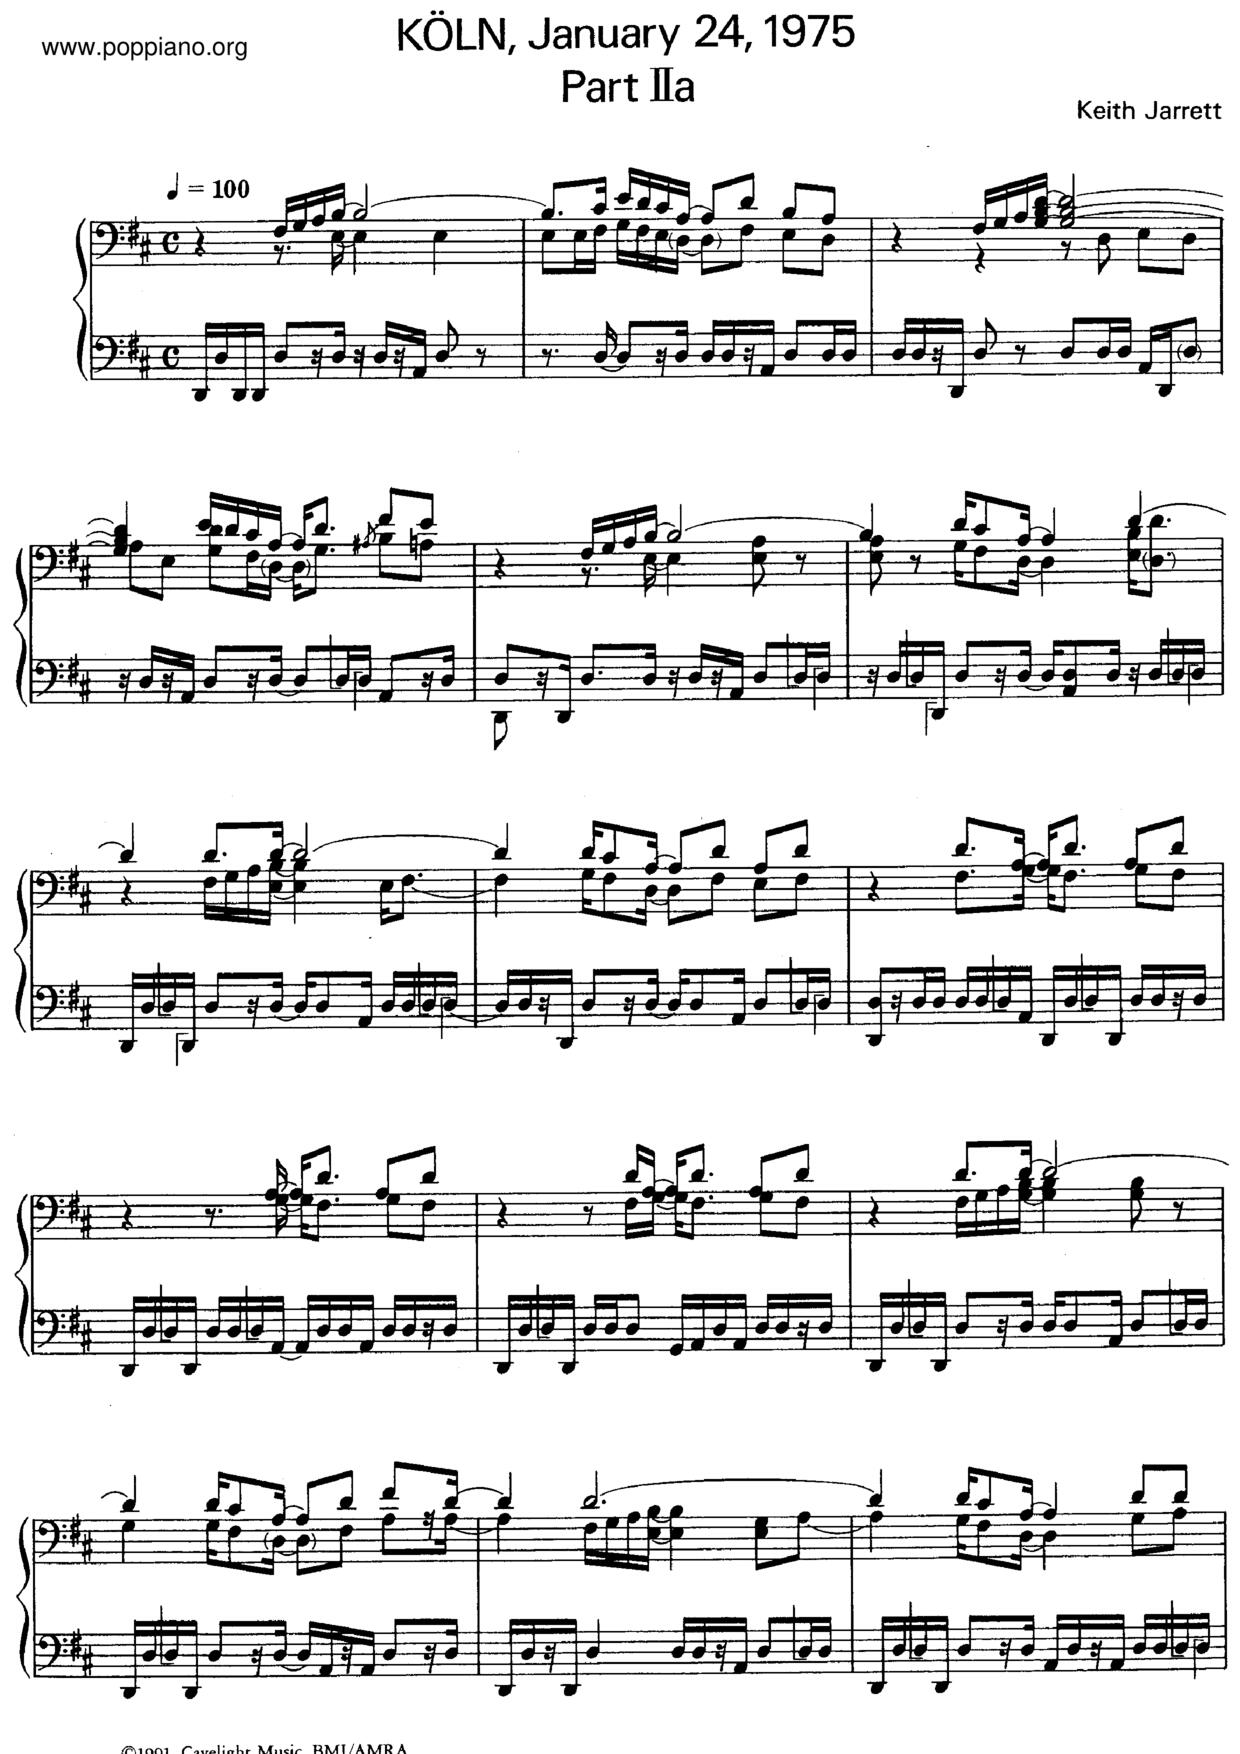 The Koln Concert Part IIa Score